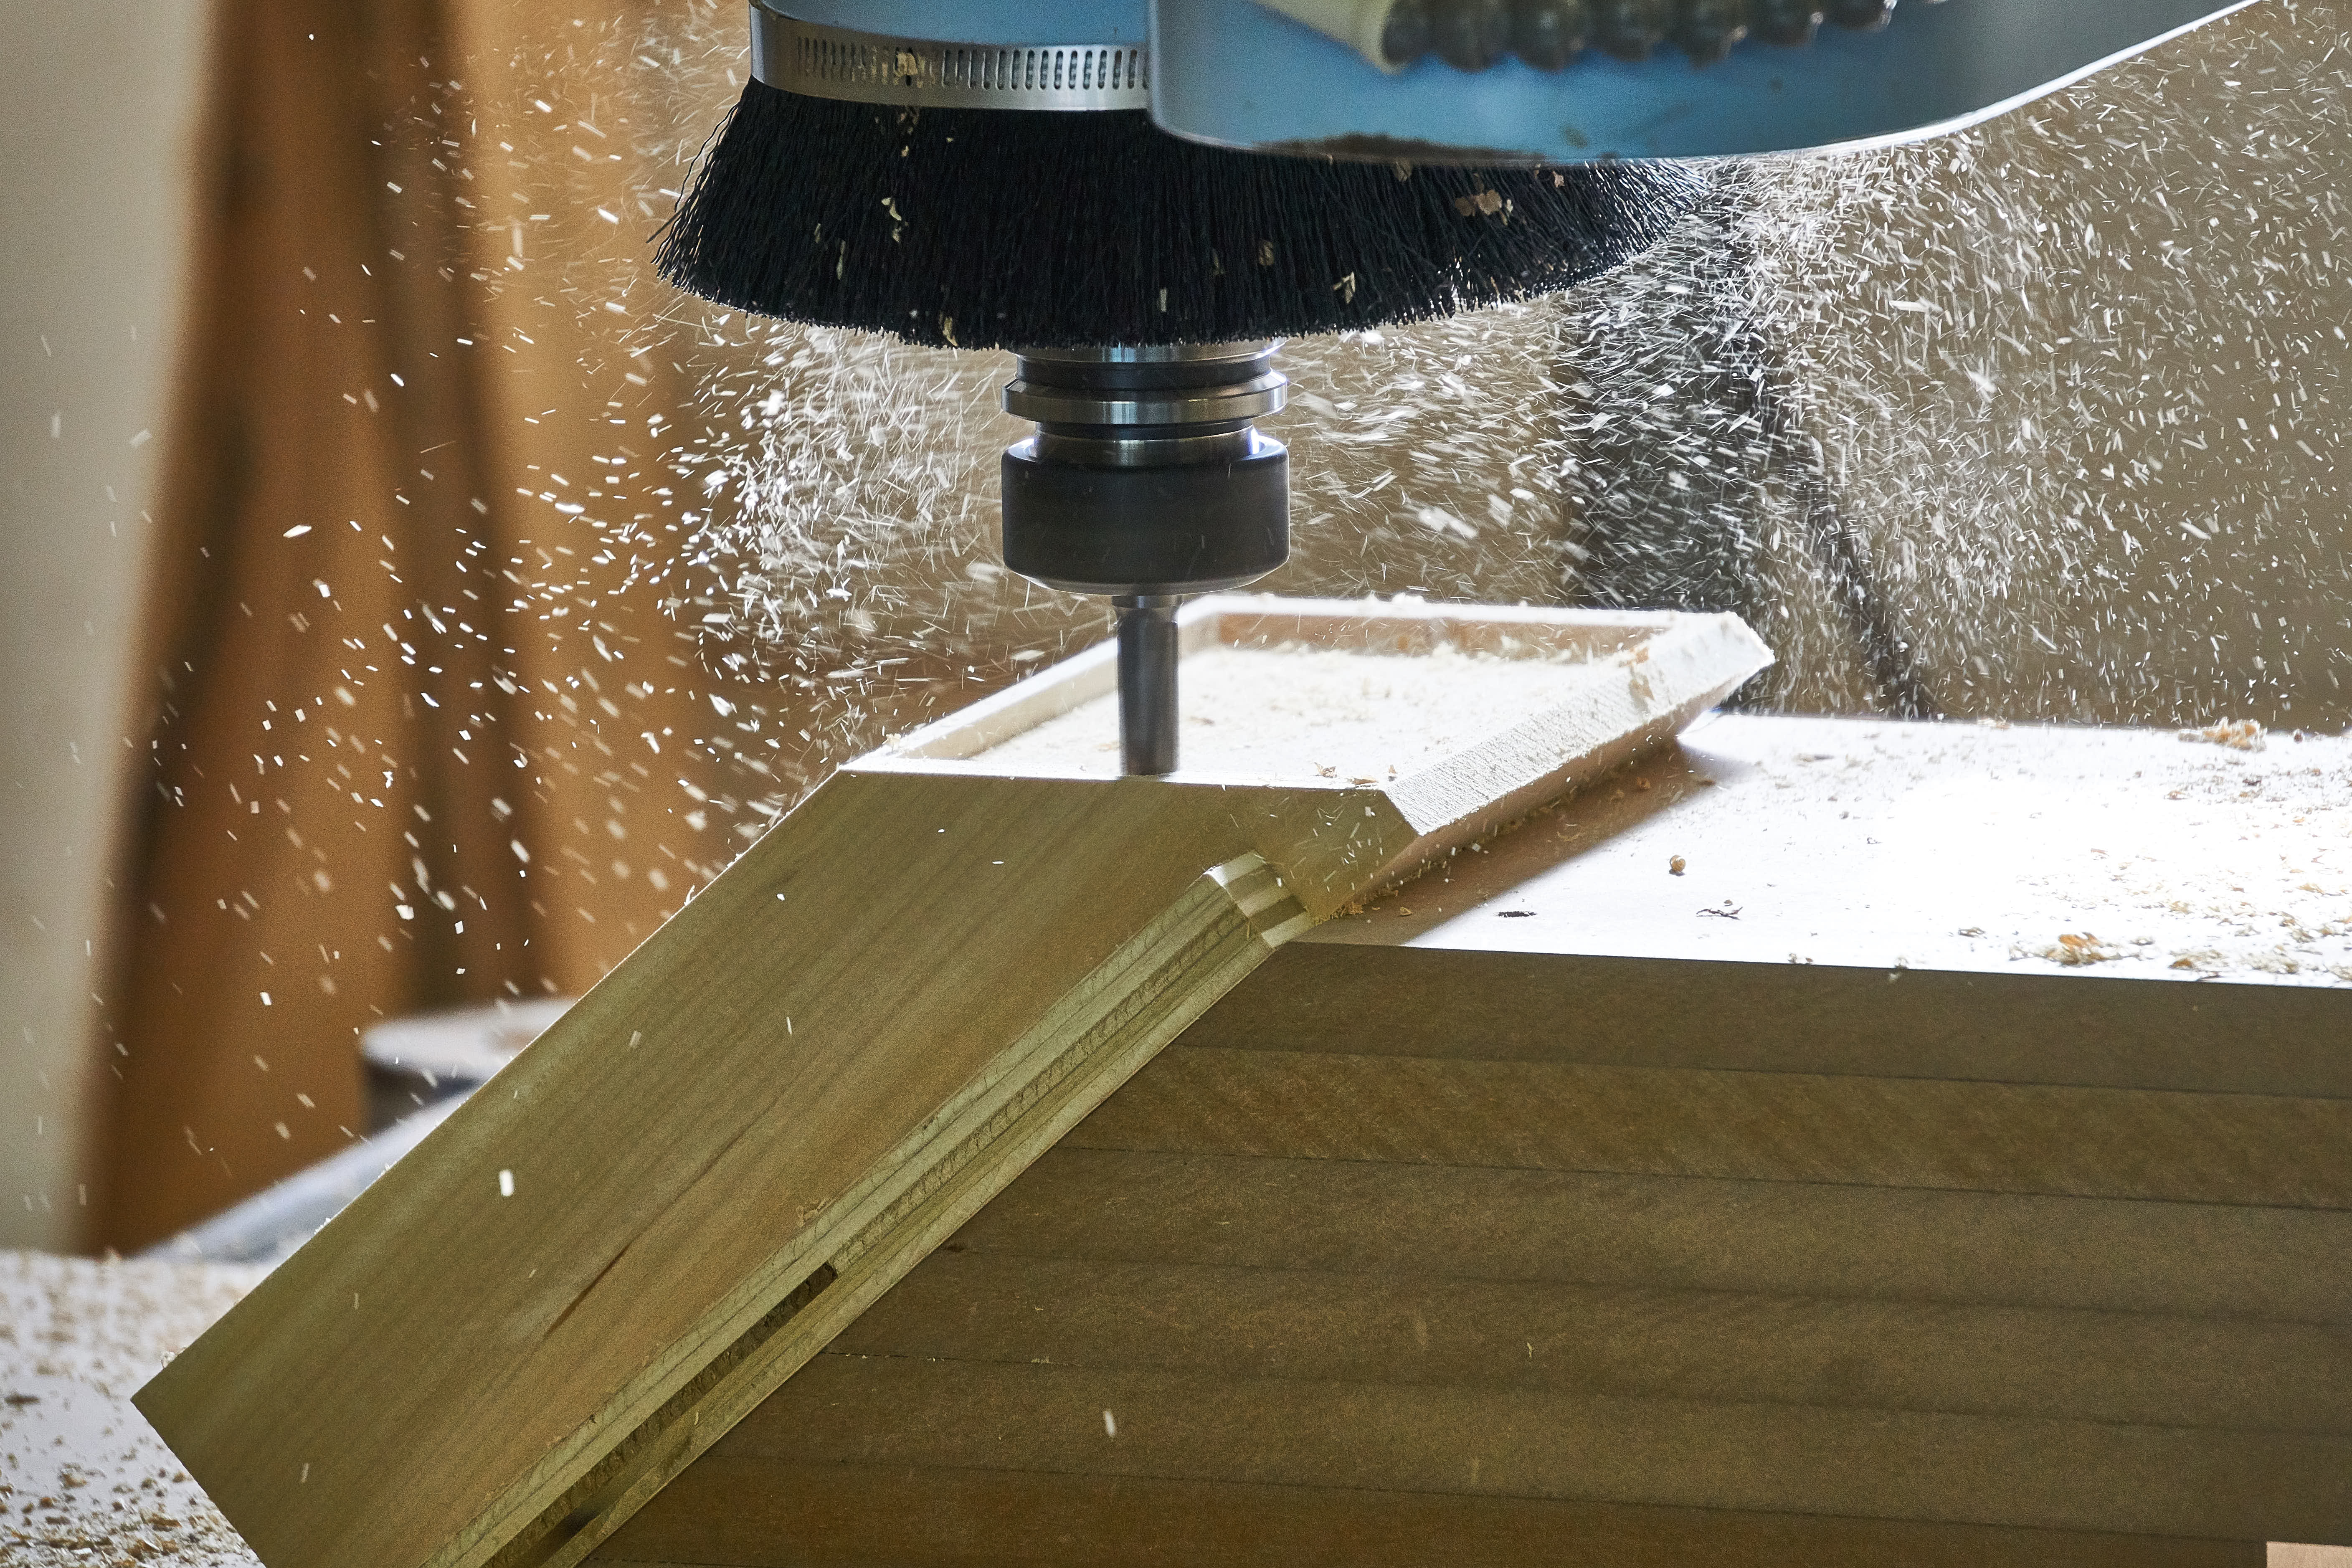 A CNC machine milling a piece of wood